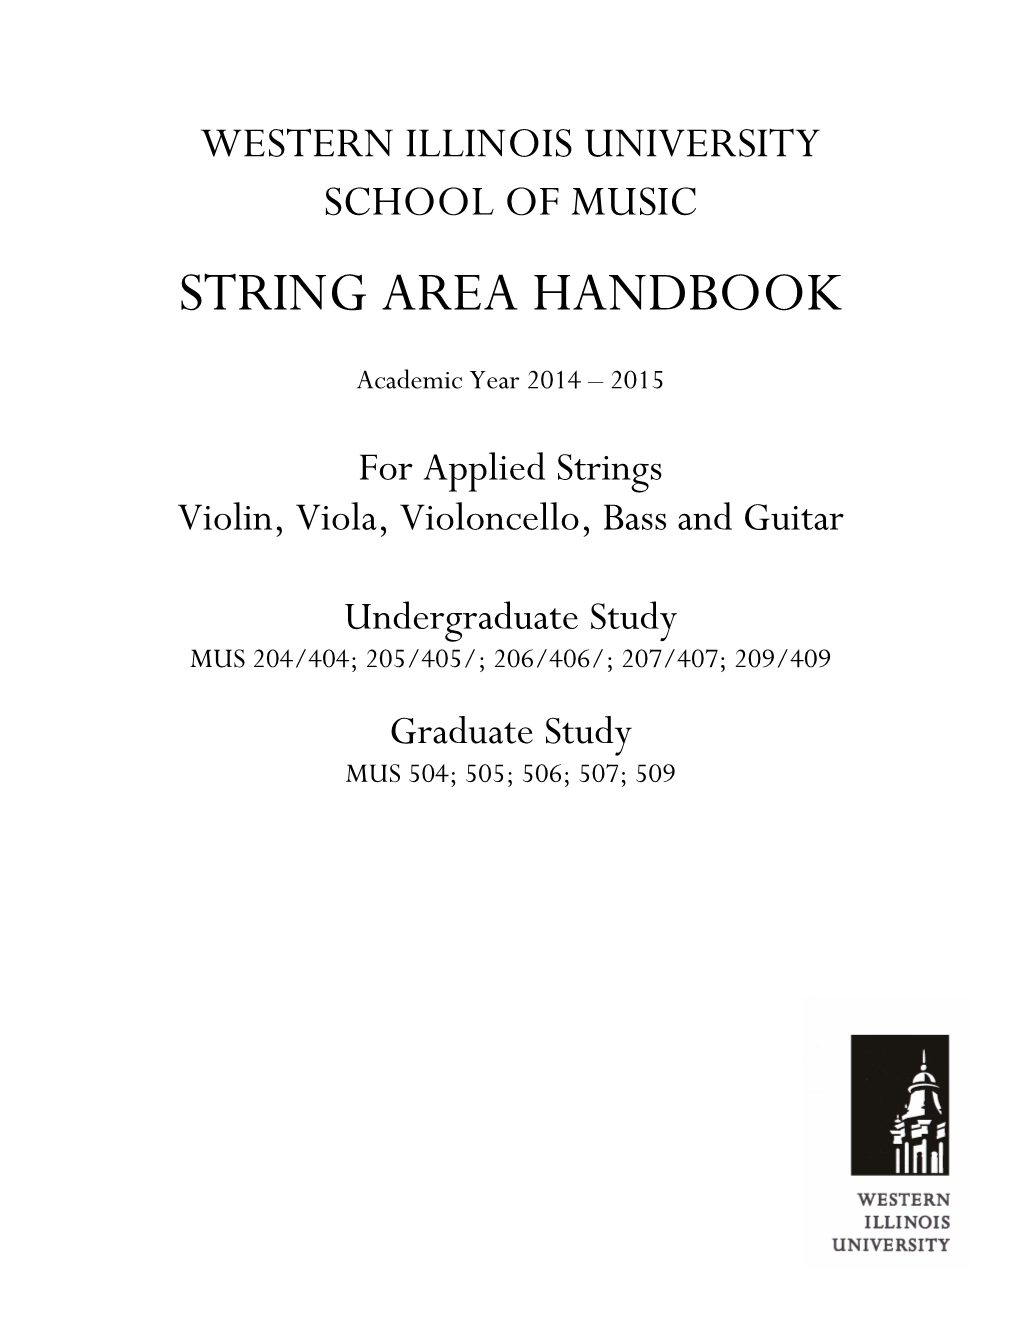 String Area Handbook